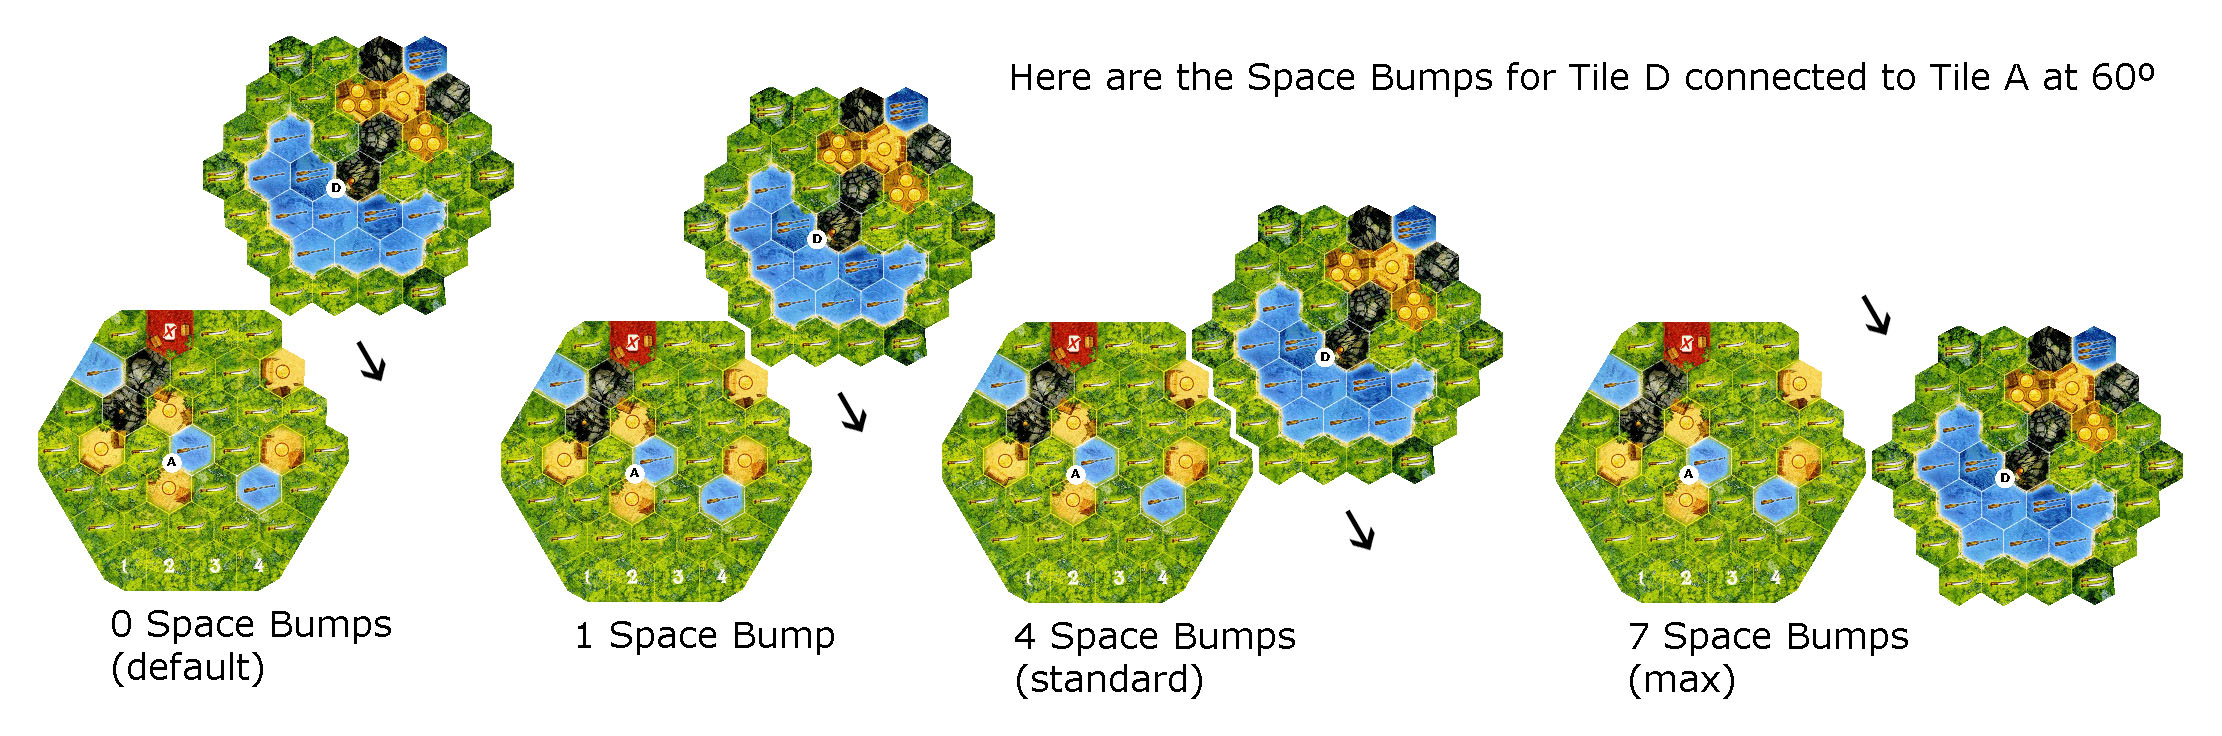 Space Bumps